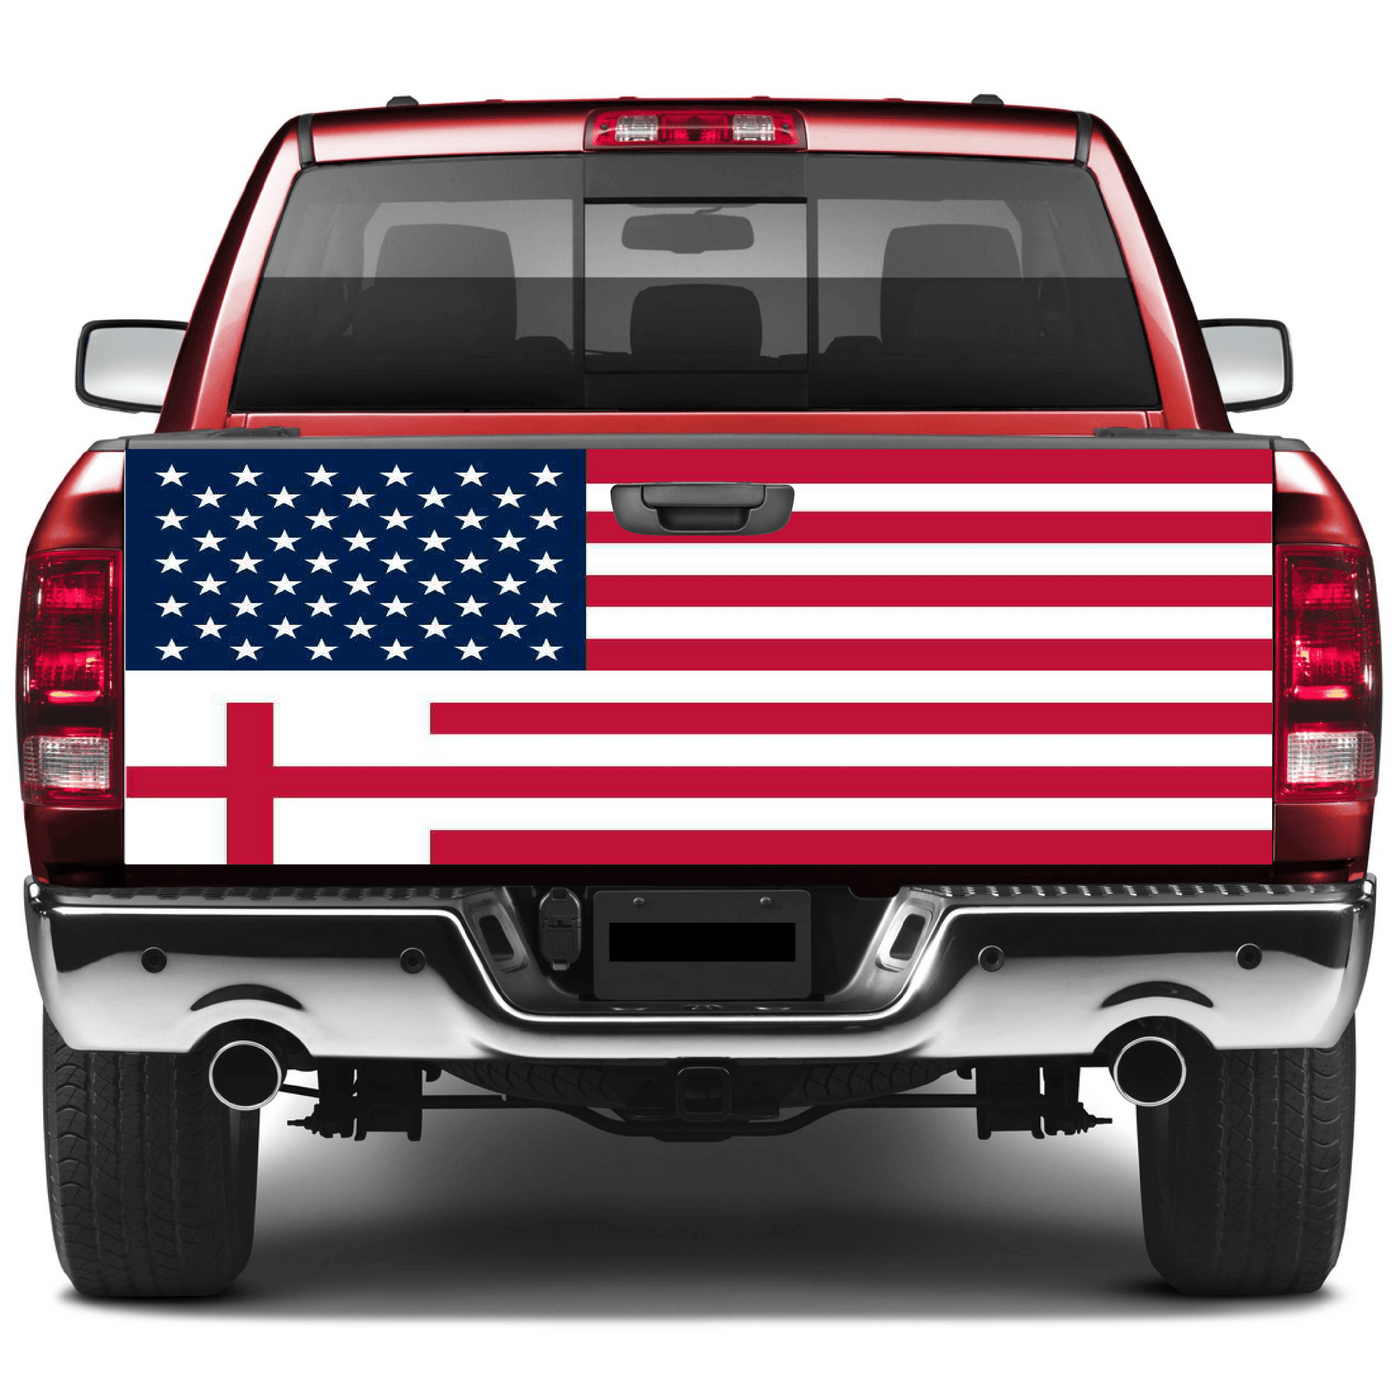 Tailgate Wraps For Trucks Wrap Vinyl Car Decals Cross American SUV Car Sticker